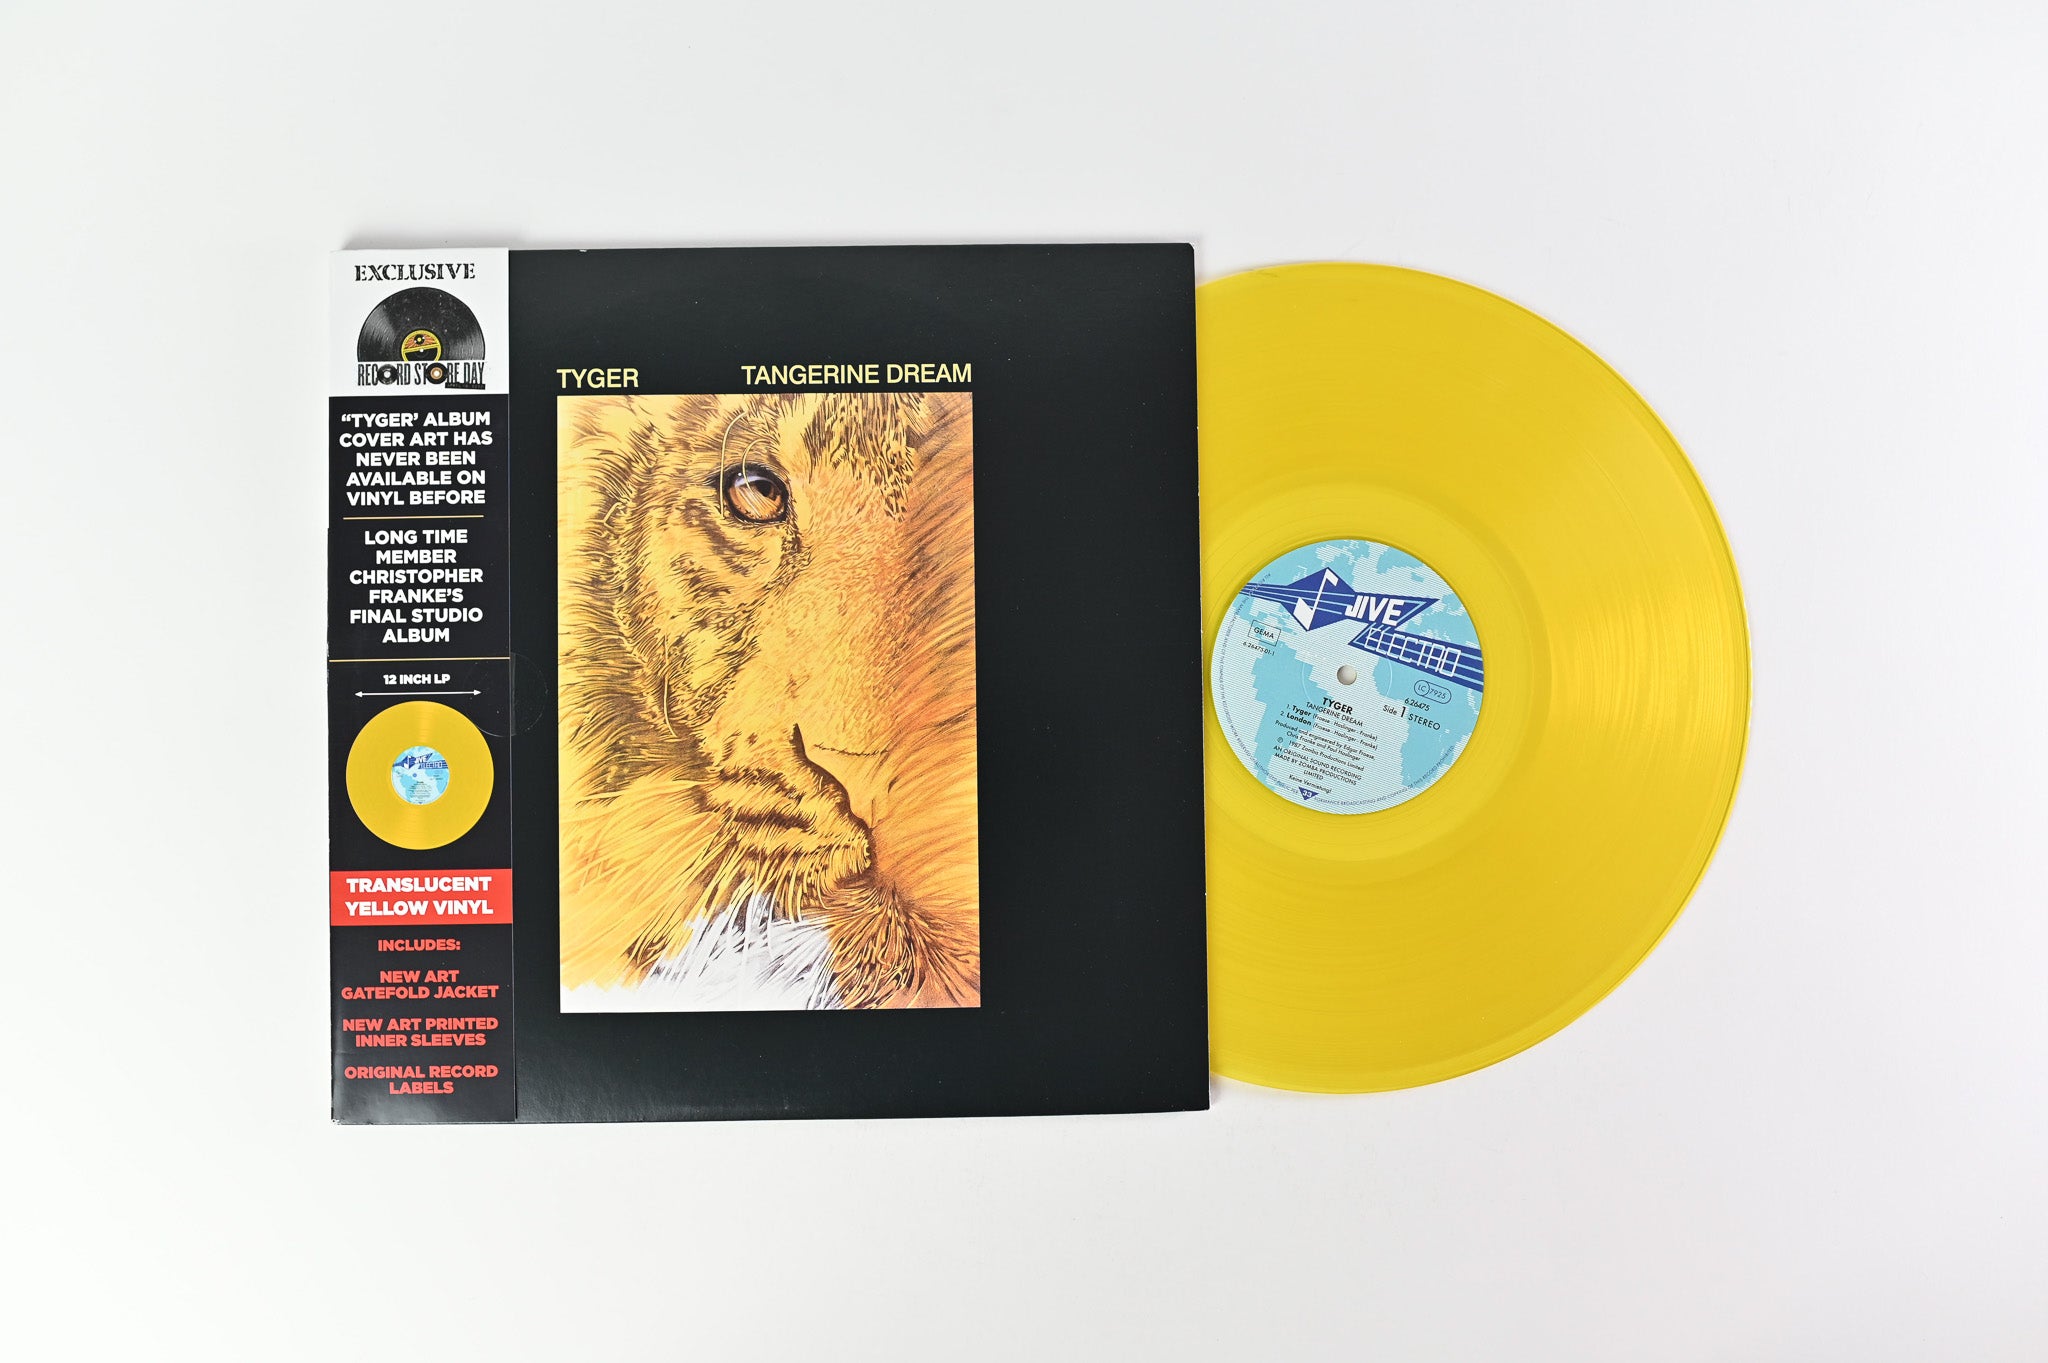 Tangerine Dream - Tyger on Culture Factory USA, Inc. - Yellow Vinyl RSD Reissue